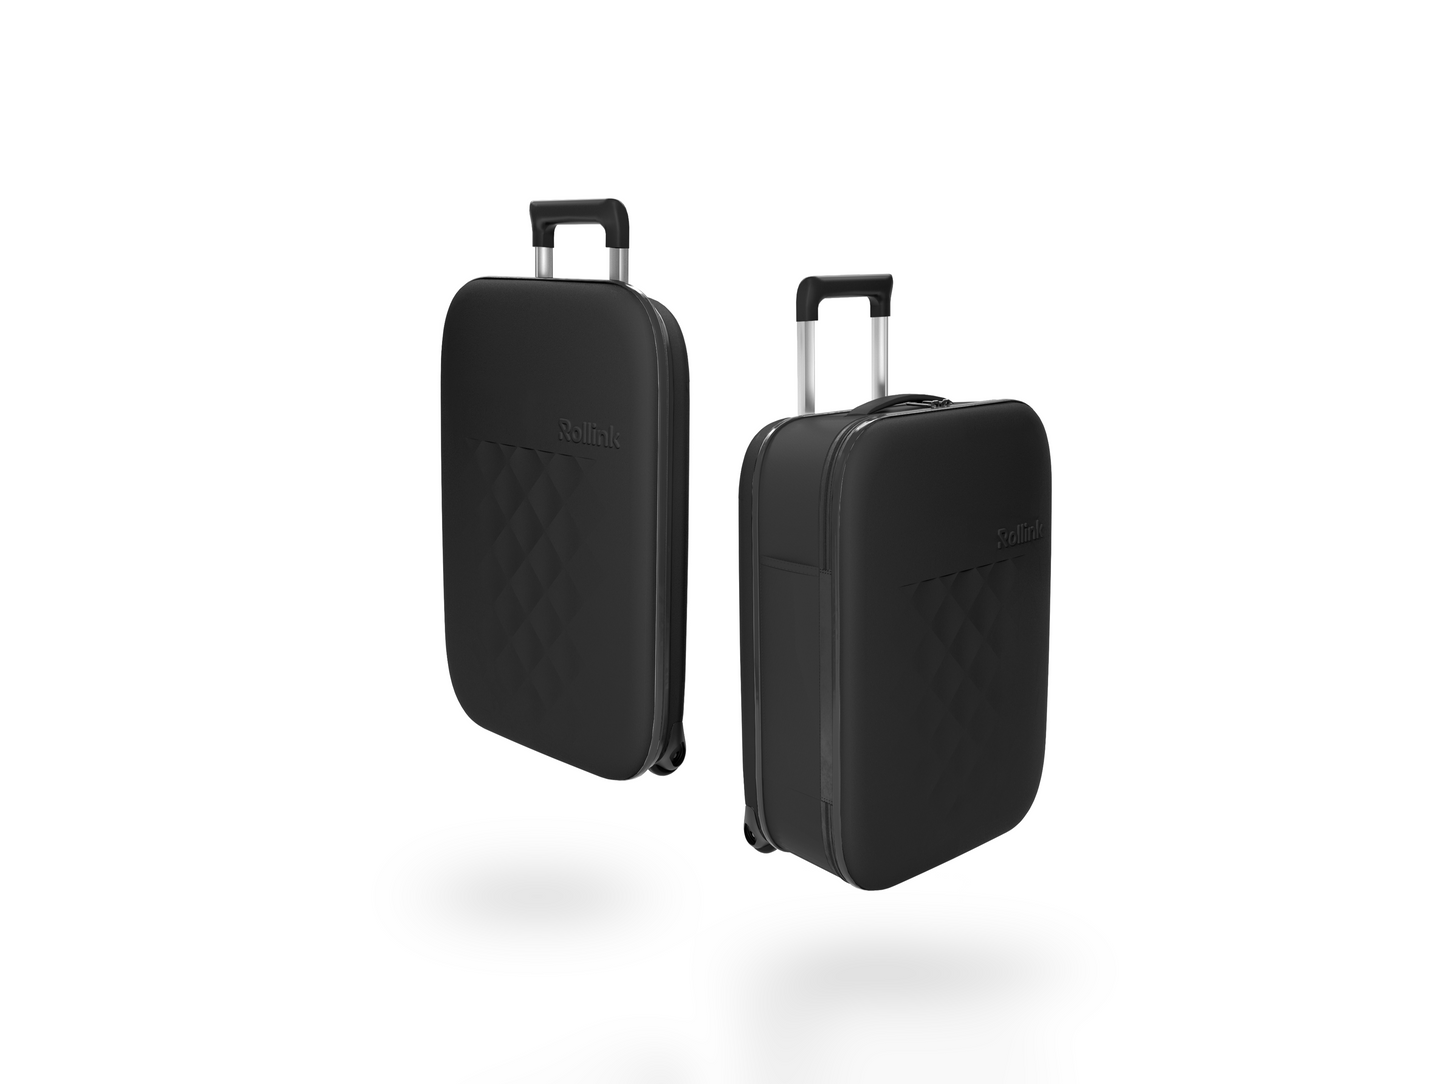 Rollink Flex Vega II Collapsible Suitcase - 21inch